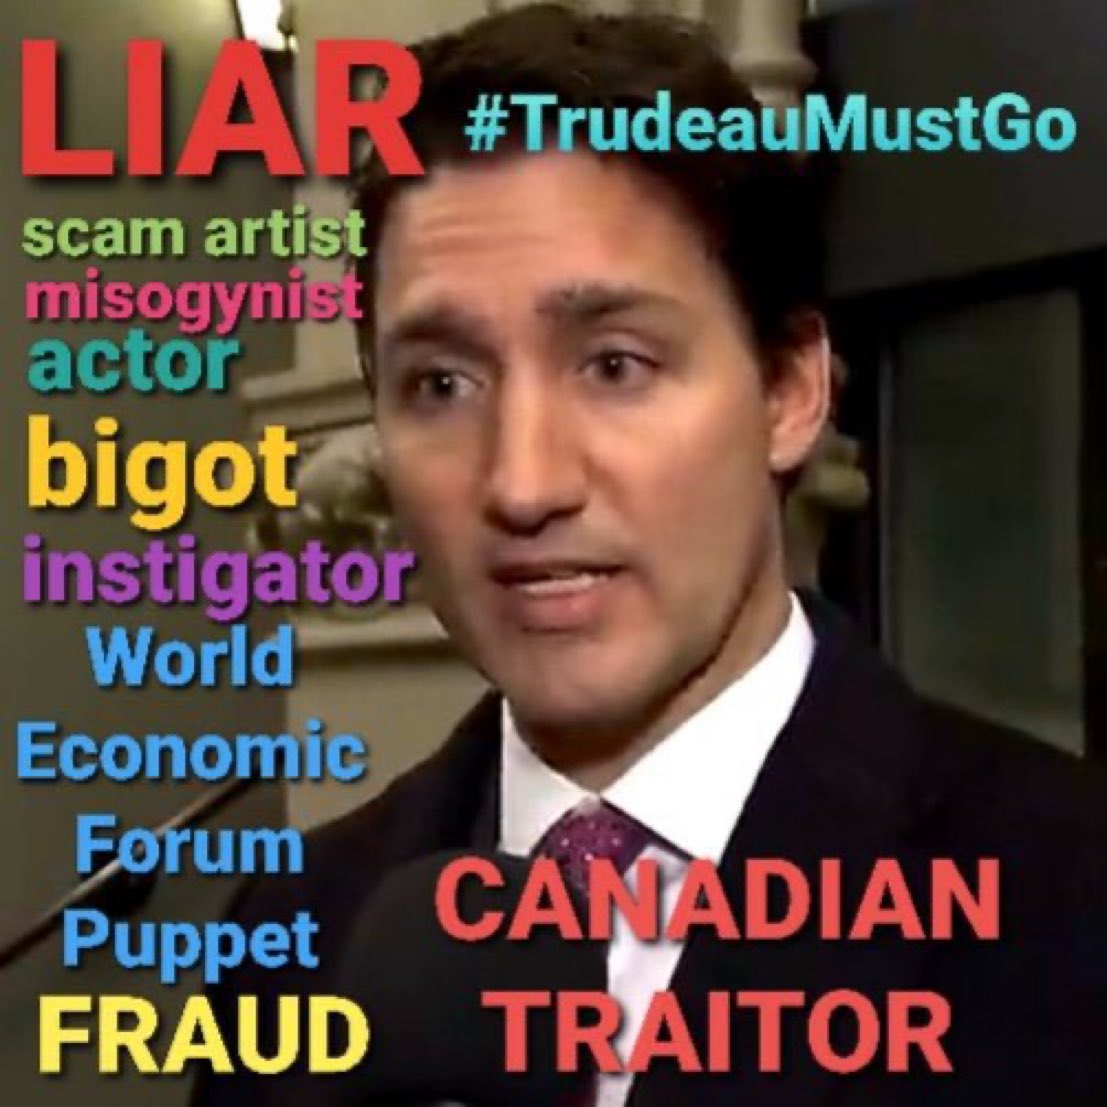 #traitor #TrudeauDestroyingCanada #TrudeauNationalDisgrace #TrudeauMustGo #TrudeauCrimeMinister #trudeauWEFpuppet